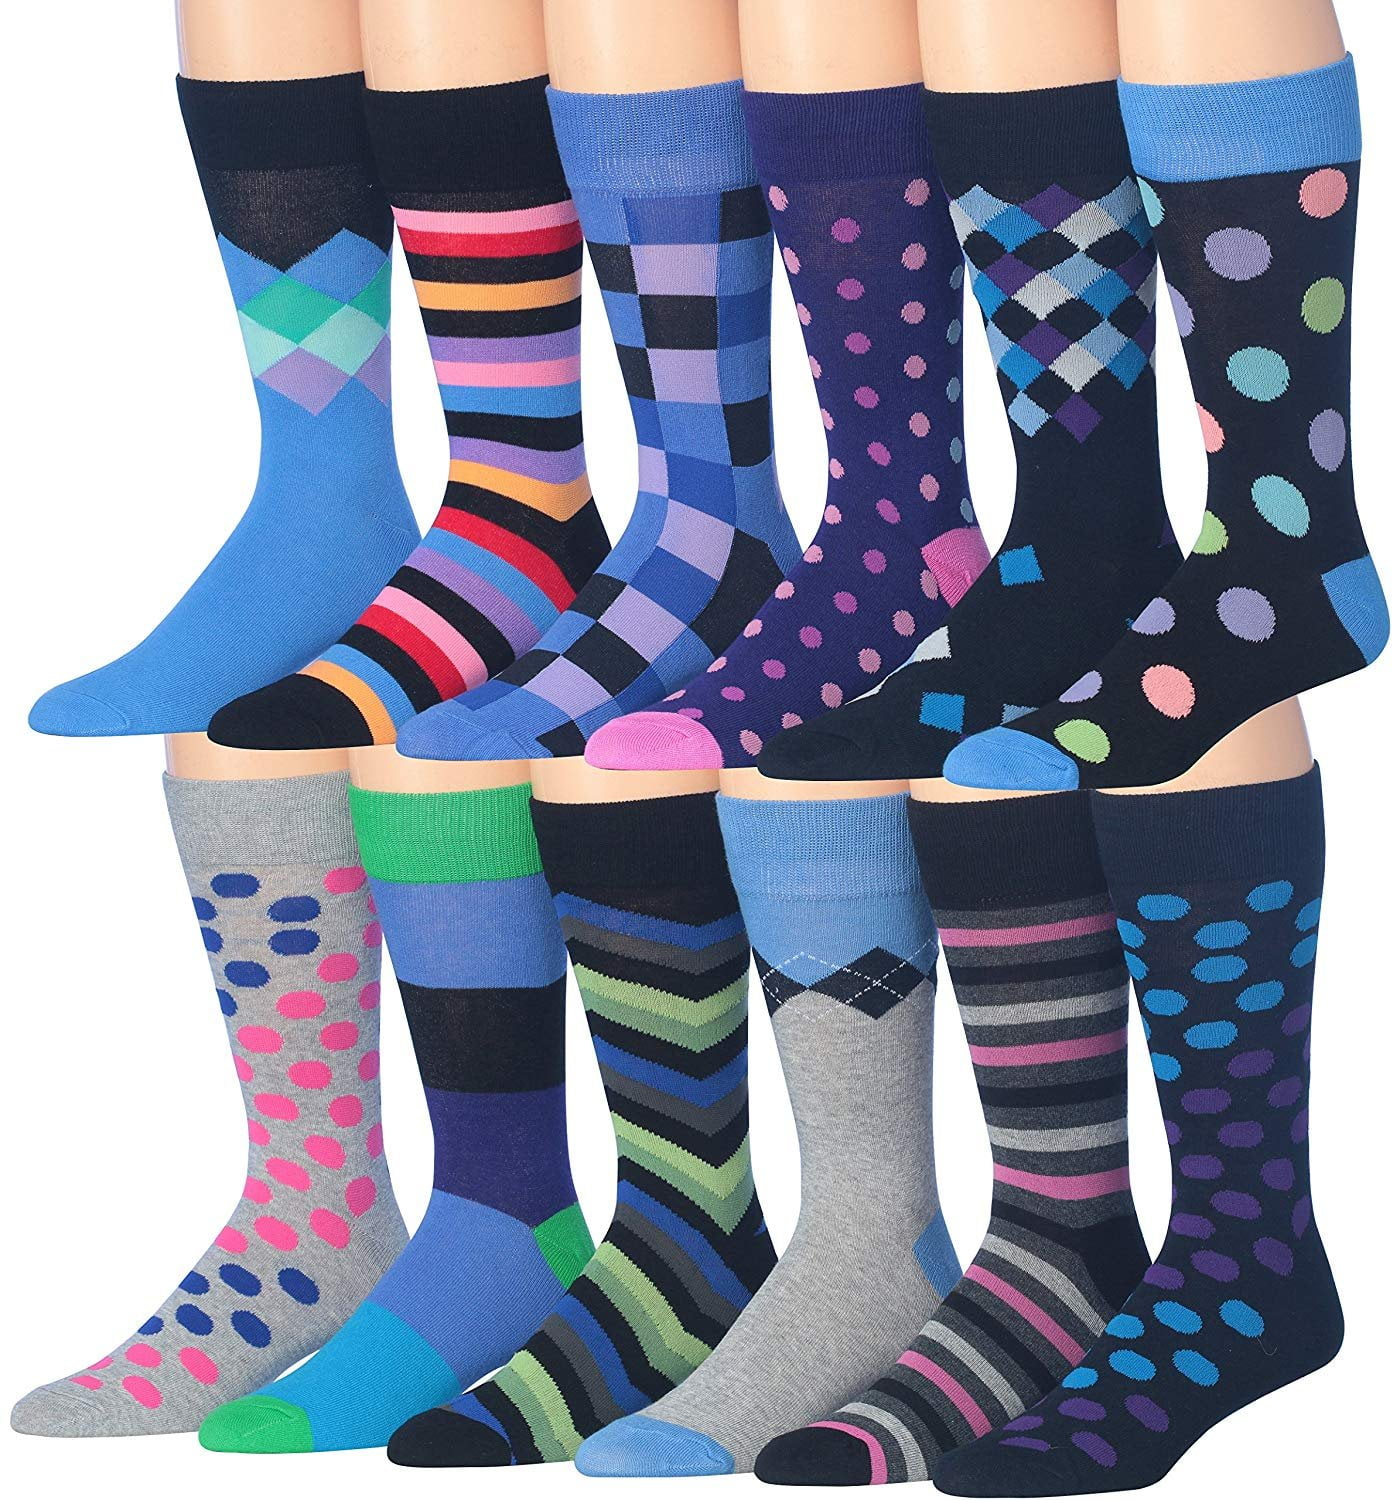 New MONEY 3 pack socks Designer Camouflage Colourful Summer 6-12 Size Gift Xmas